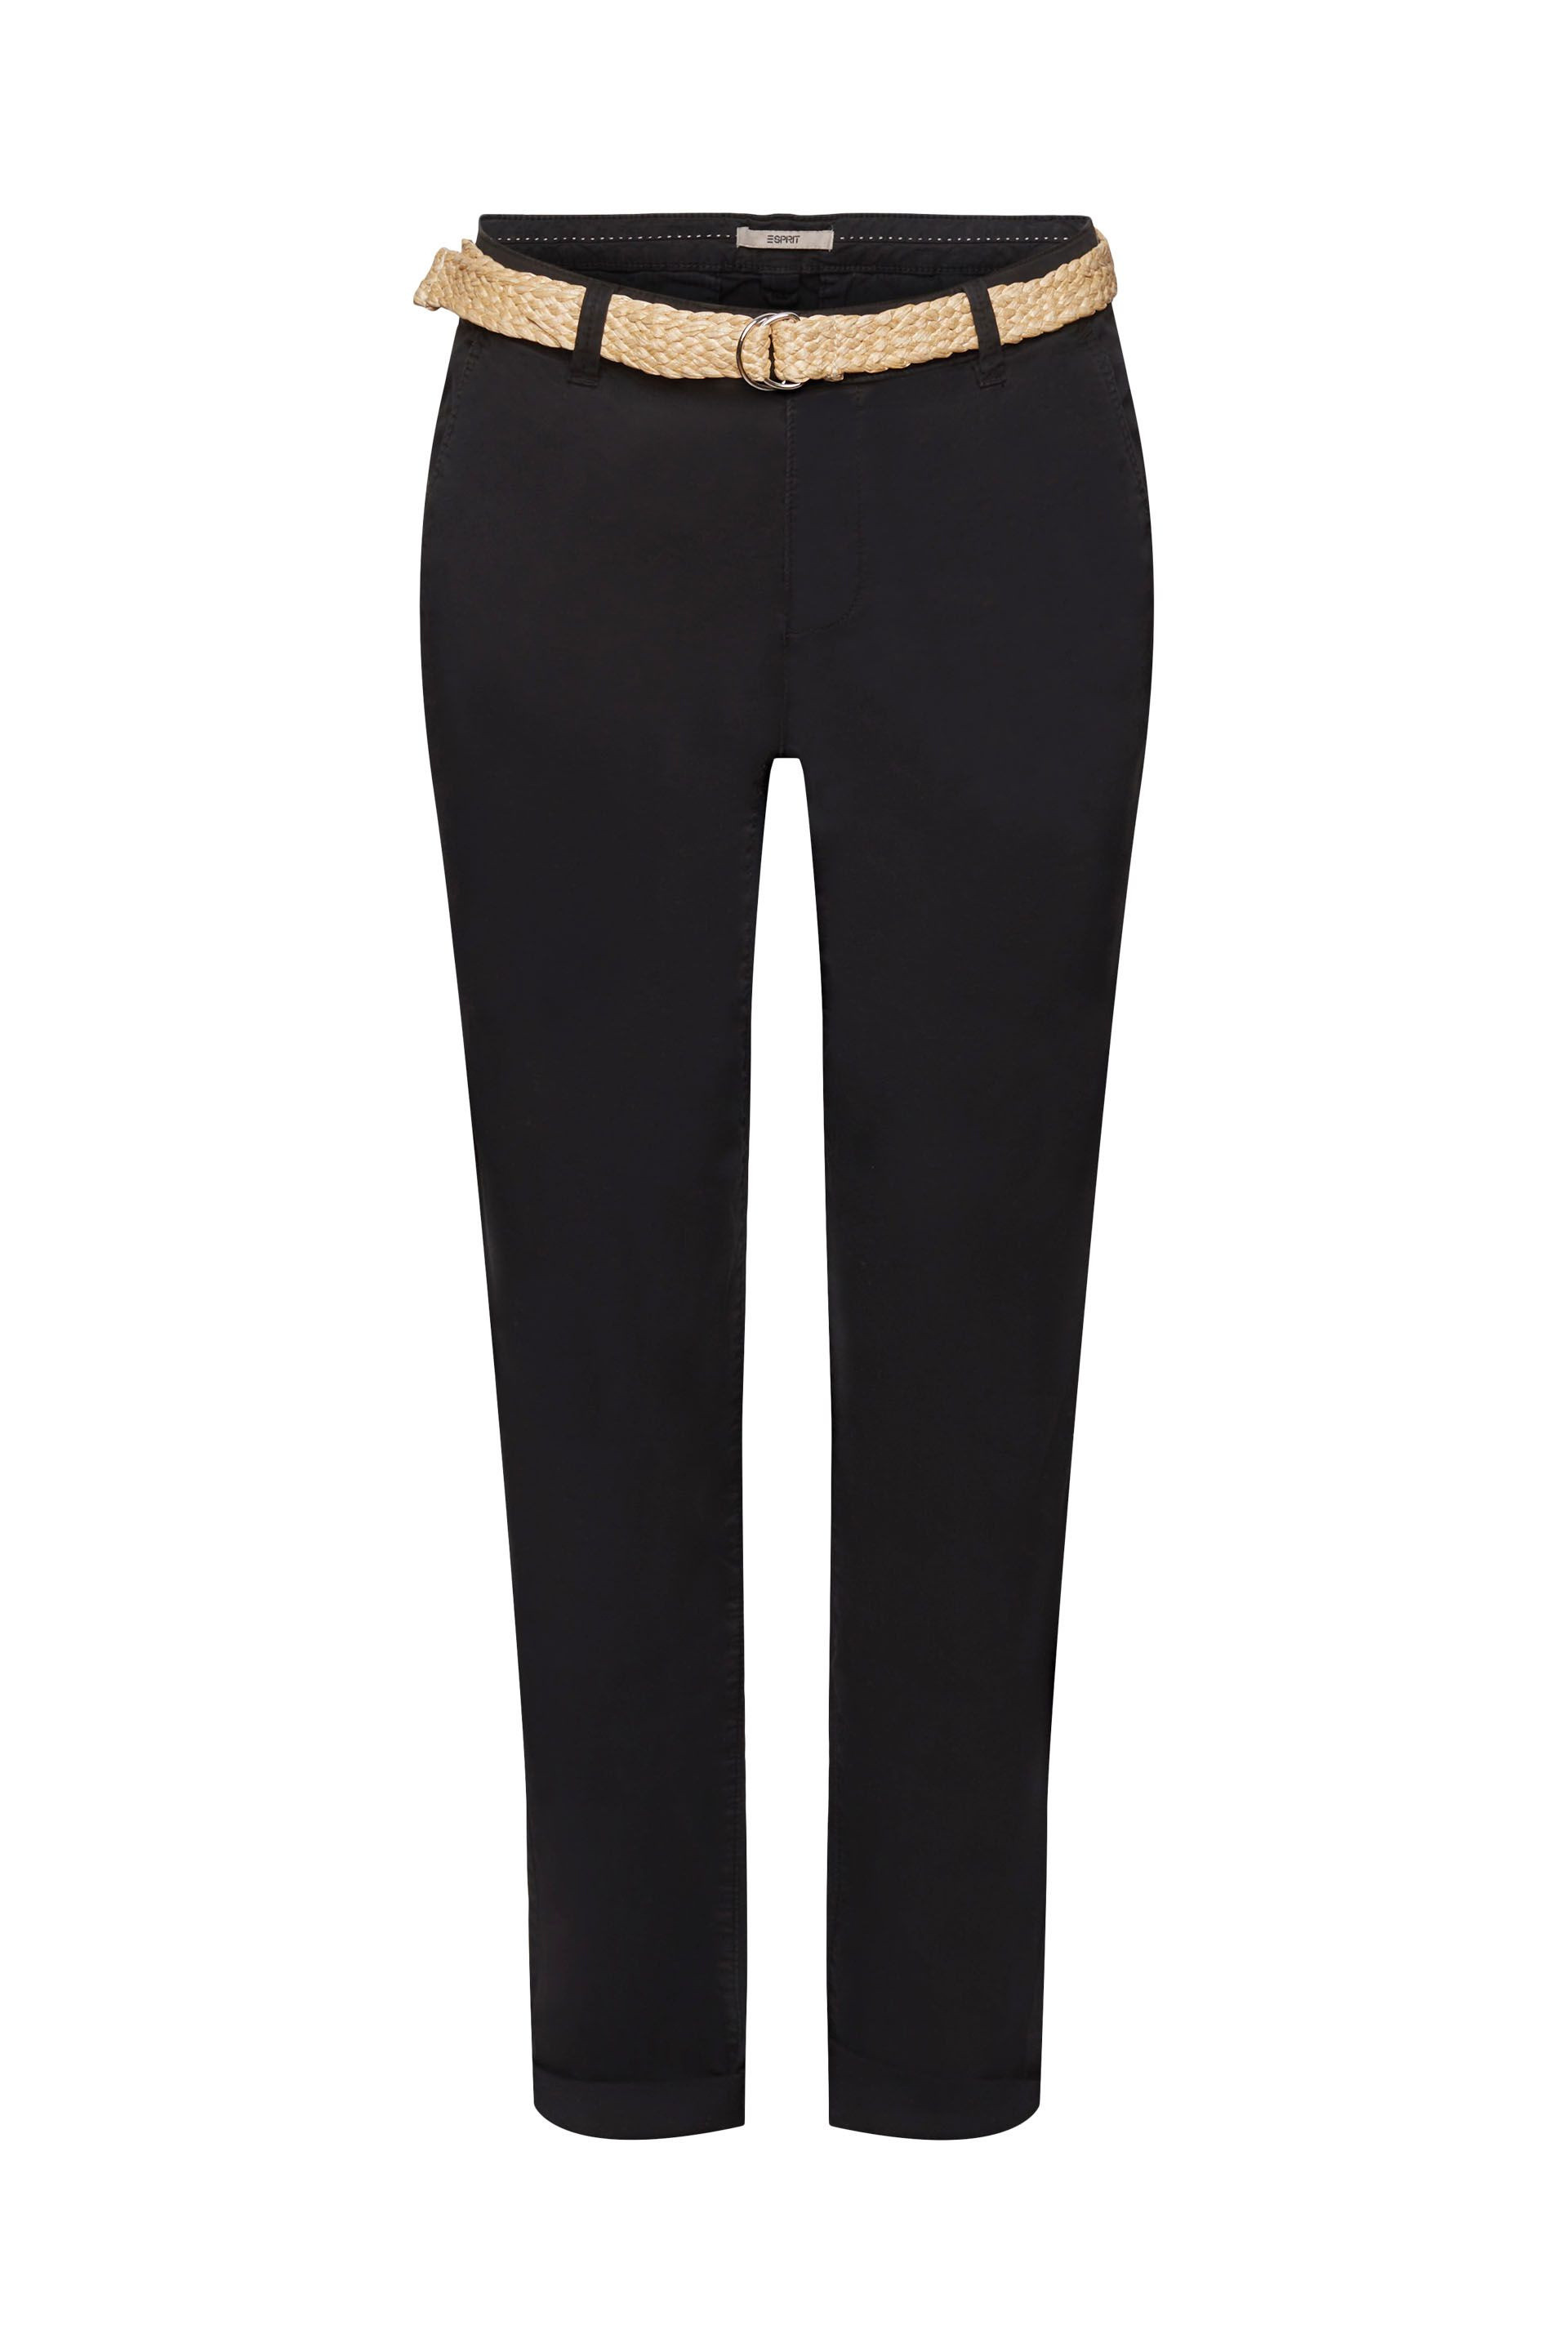 Esprit - Pantaloni chino cropped con cintura, Nero, large image number 0